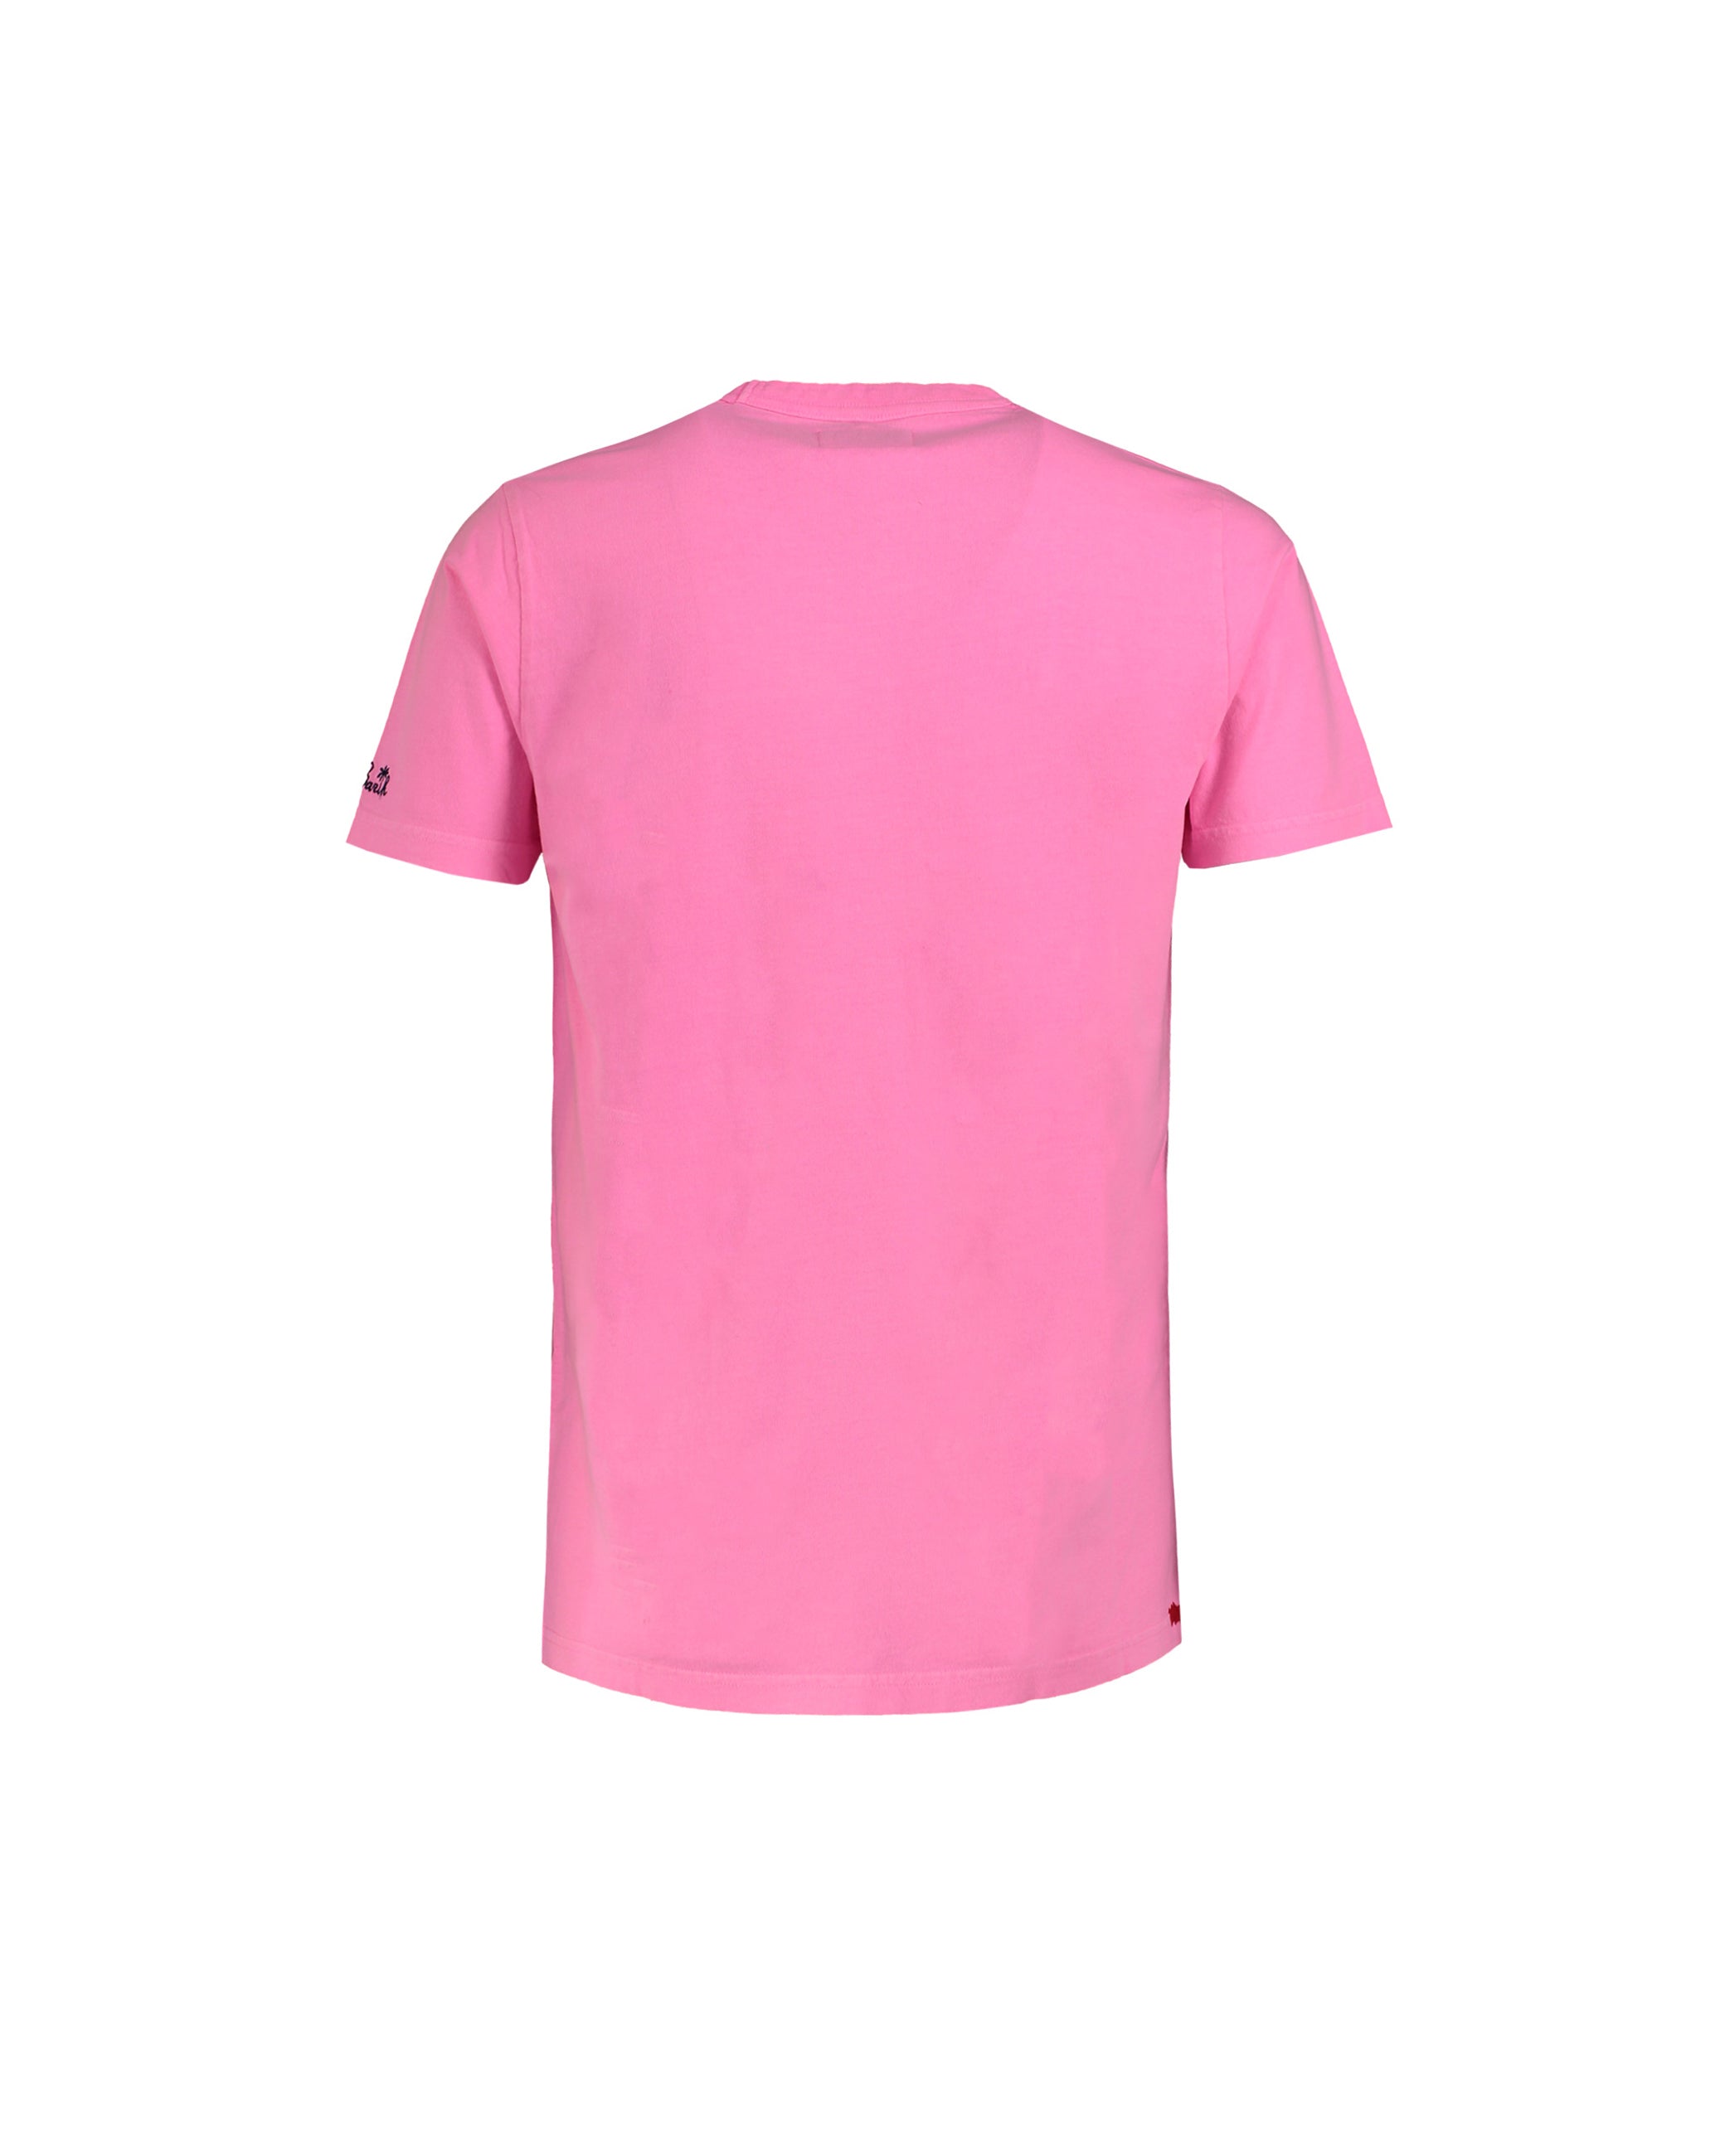 T-shirt Palm rosa